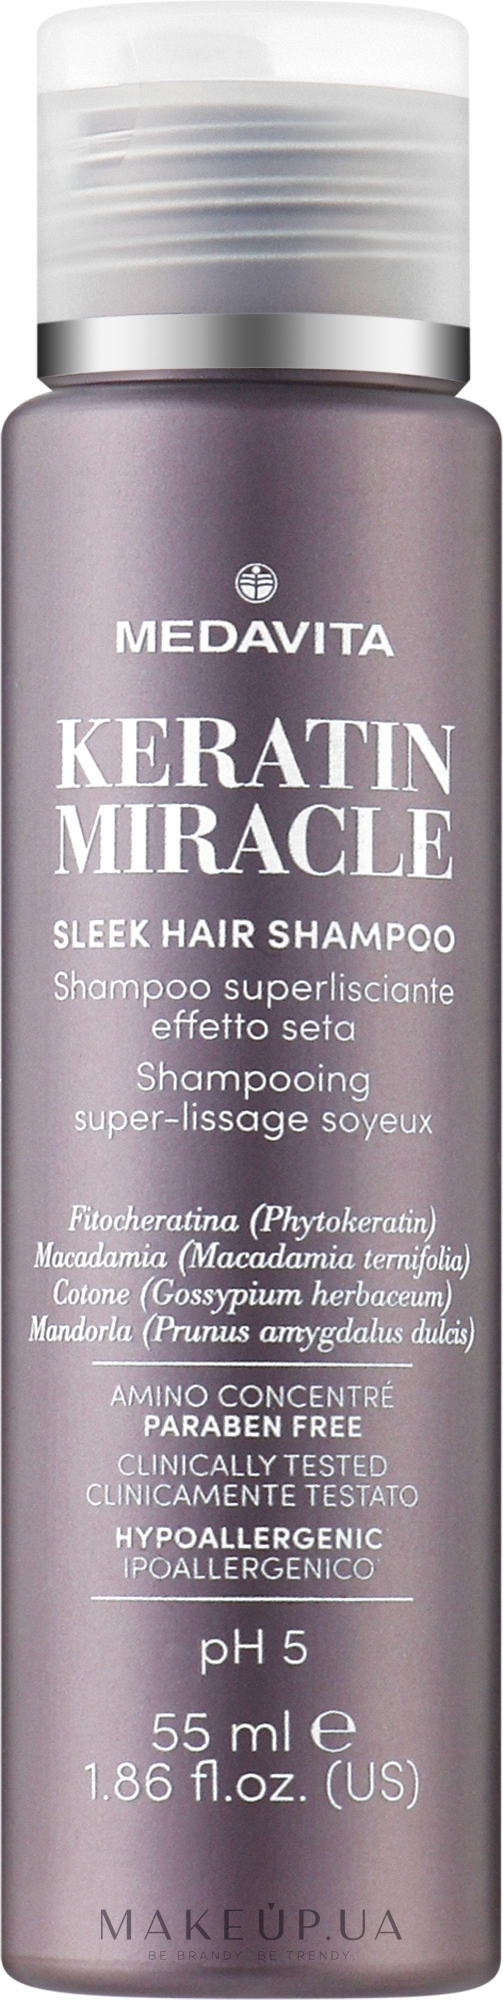 Ультраразглаживающий шампунь для волос с эффектом шелка - Medavita Keratin Miracle Sleek Hair Shampoo — фото 55ml